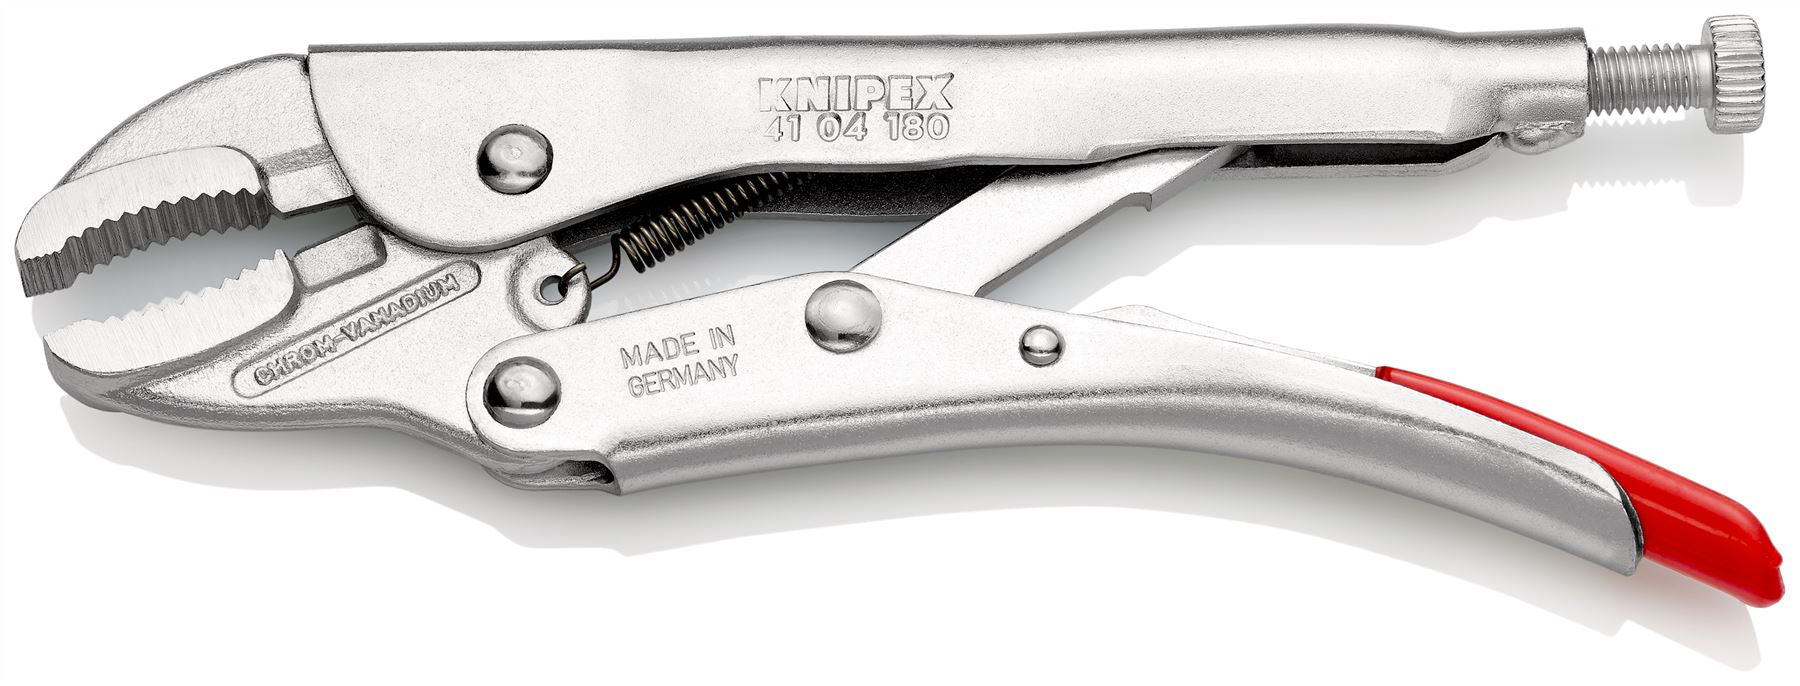 KNIPEX Grip Locking Pliers Mole Grips 180mm Galvanised 41 04 180